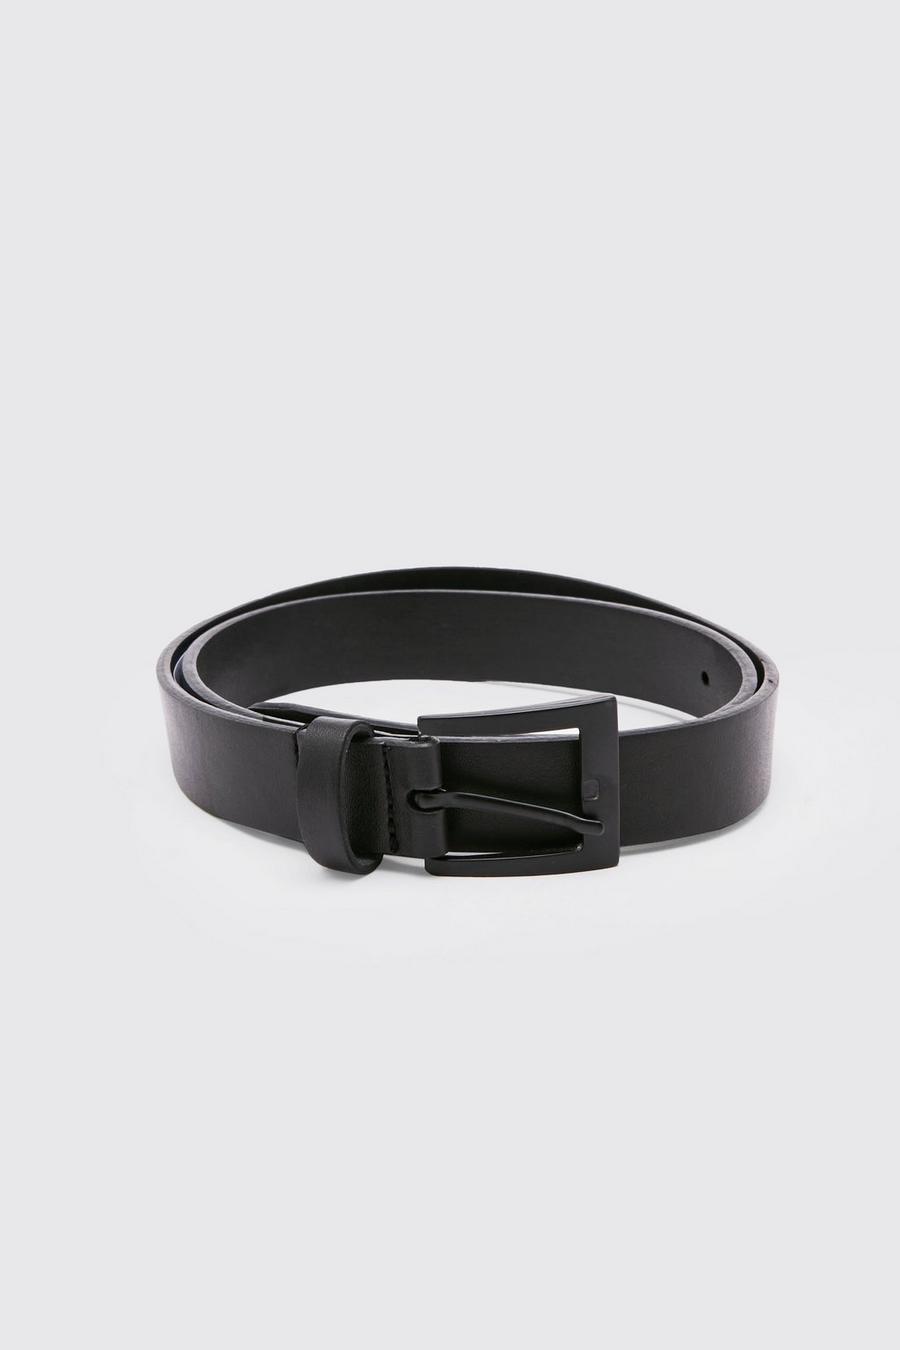 Black Matte Rectangle Buckle Leather Look Belt